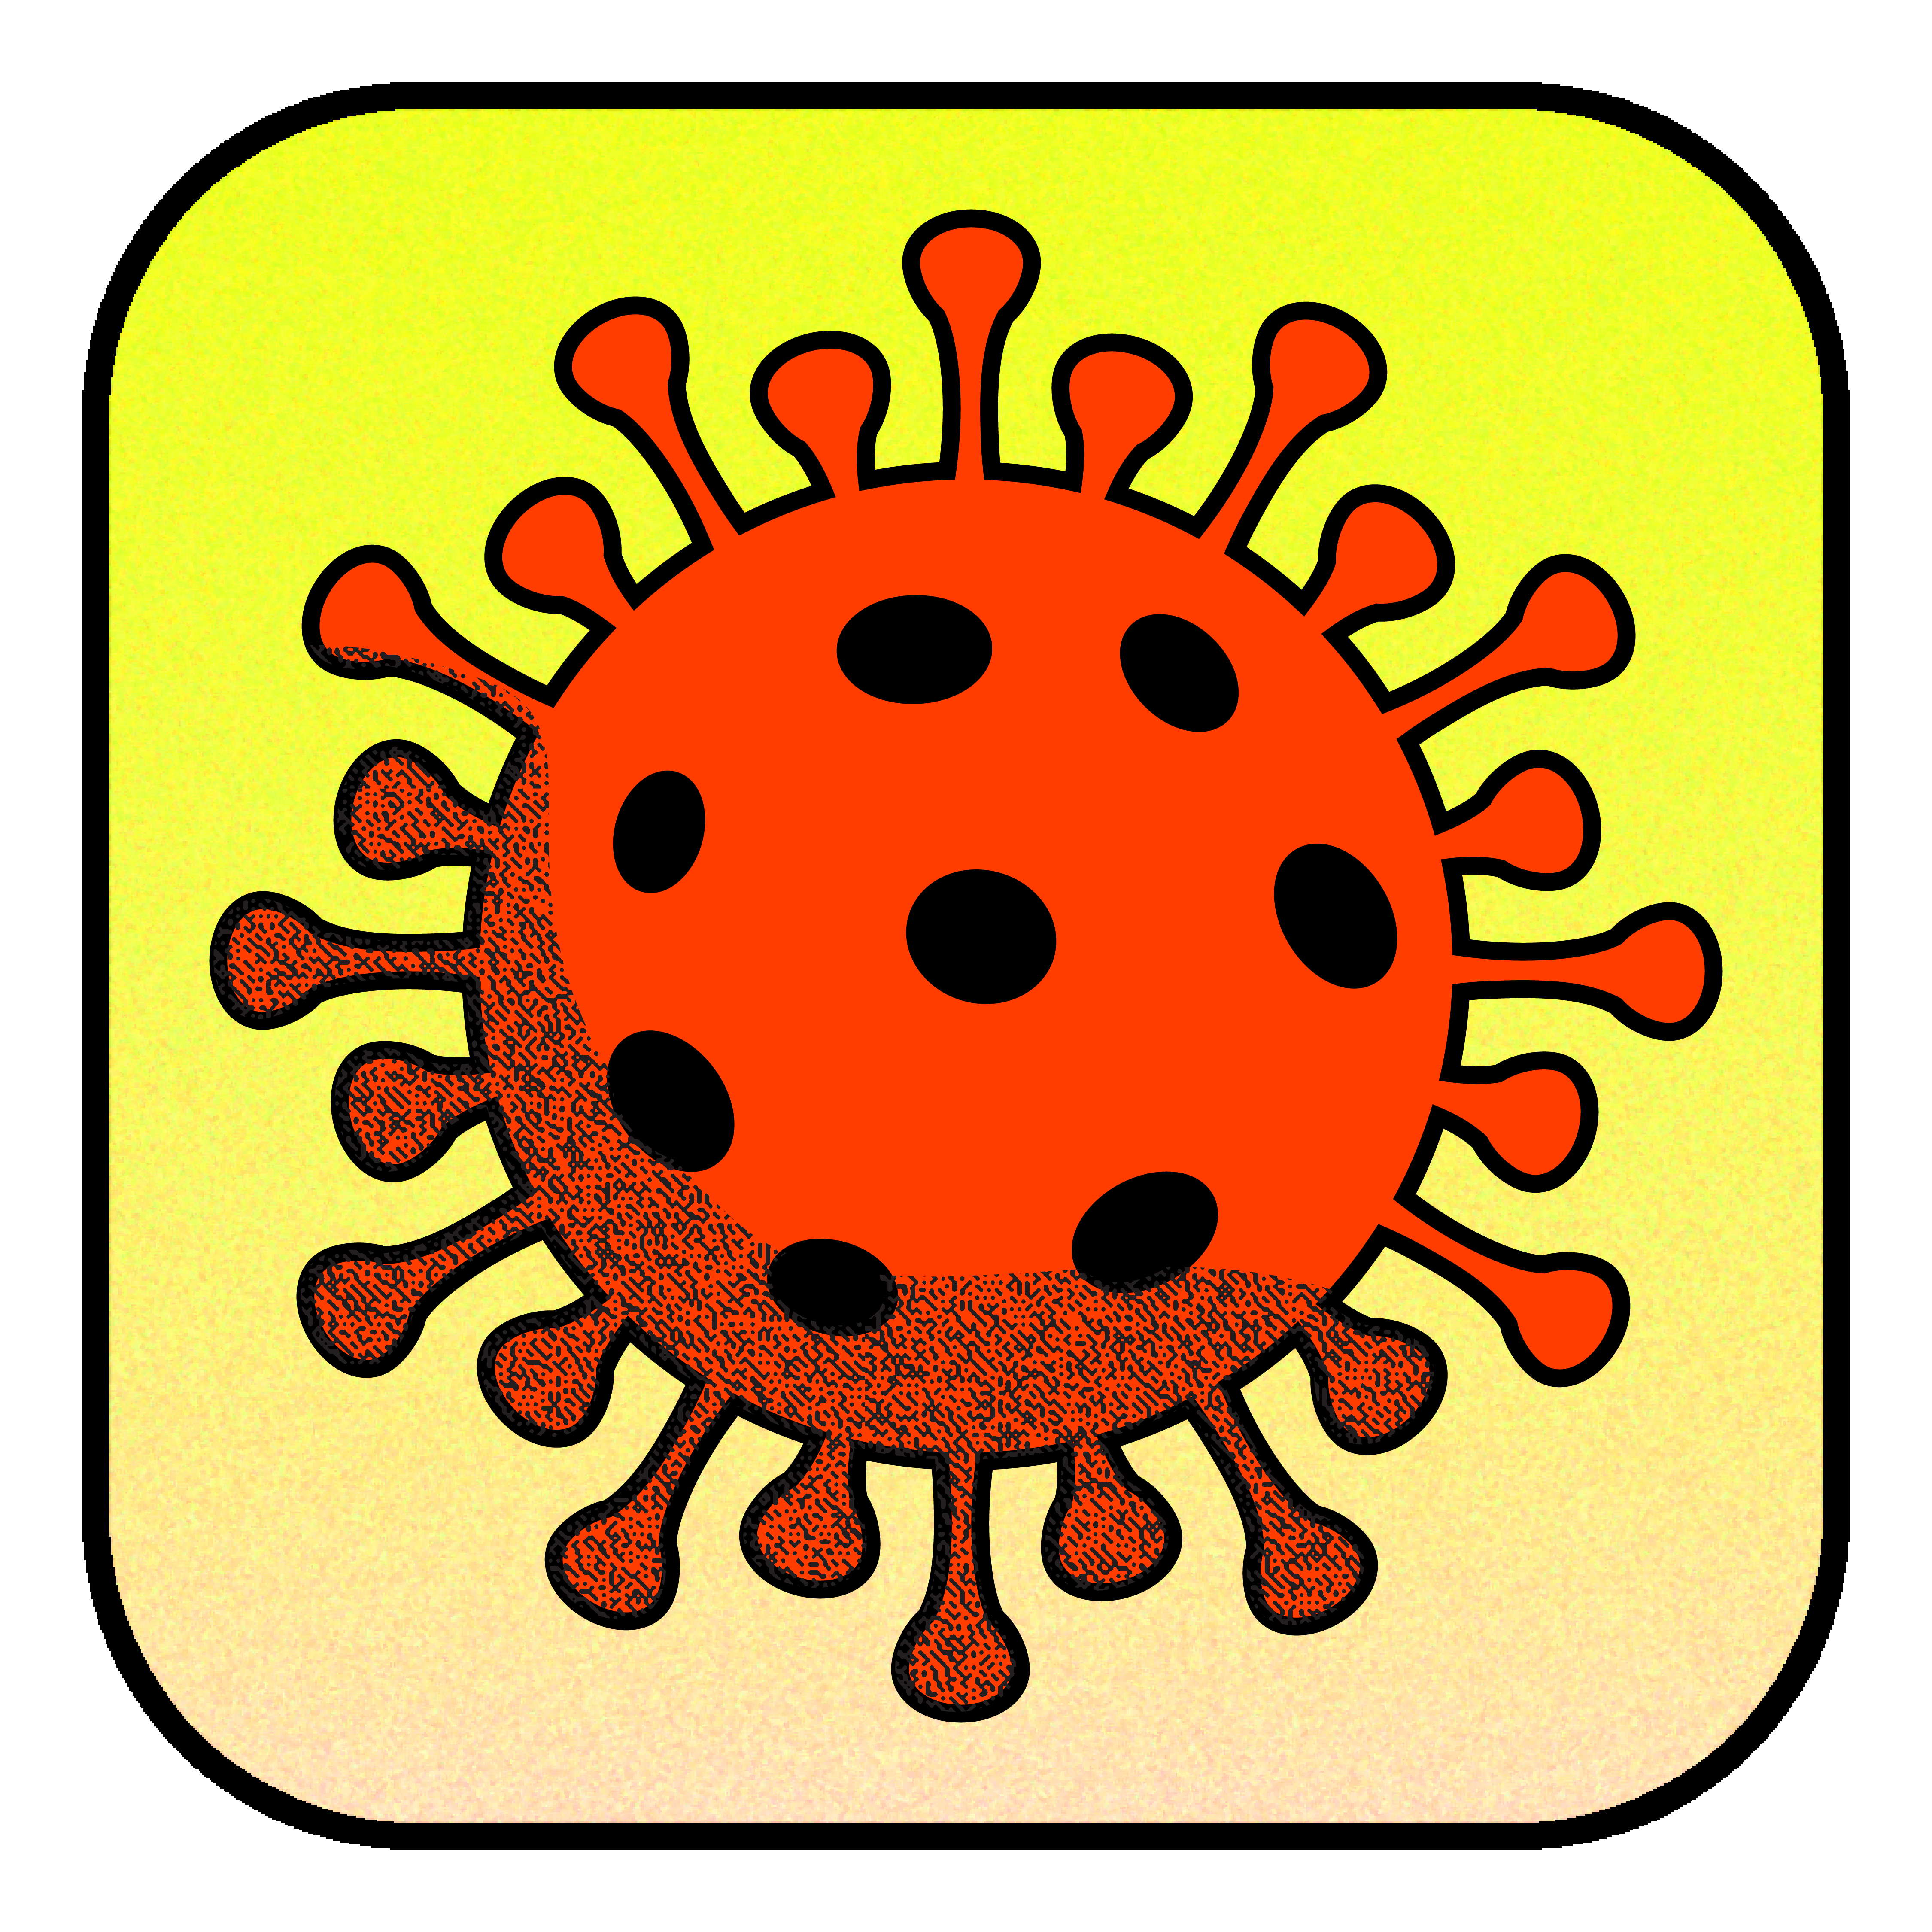 an illustration of a virus